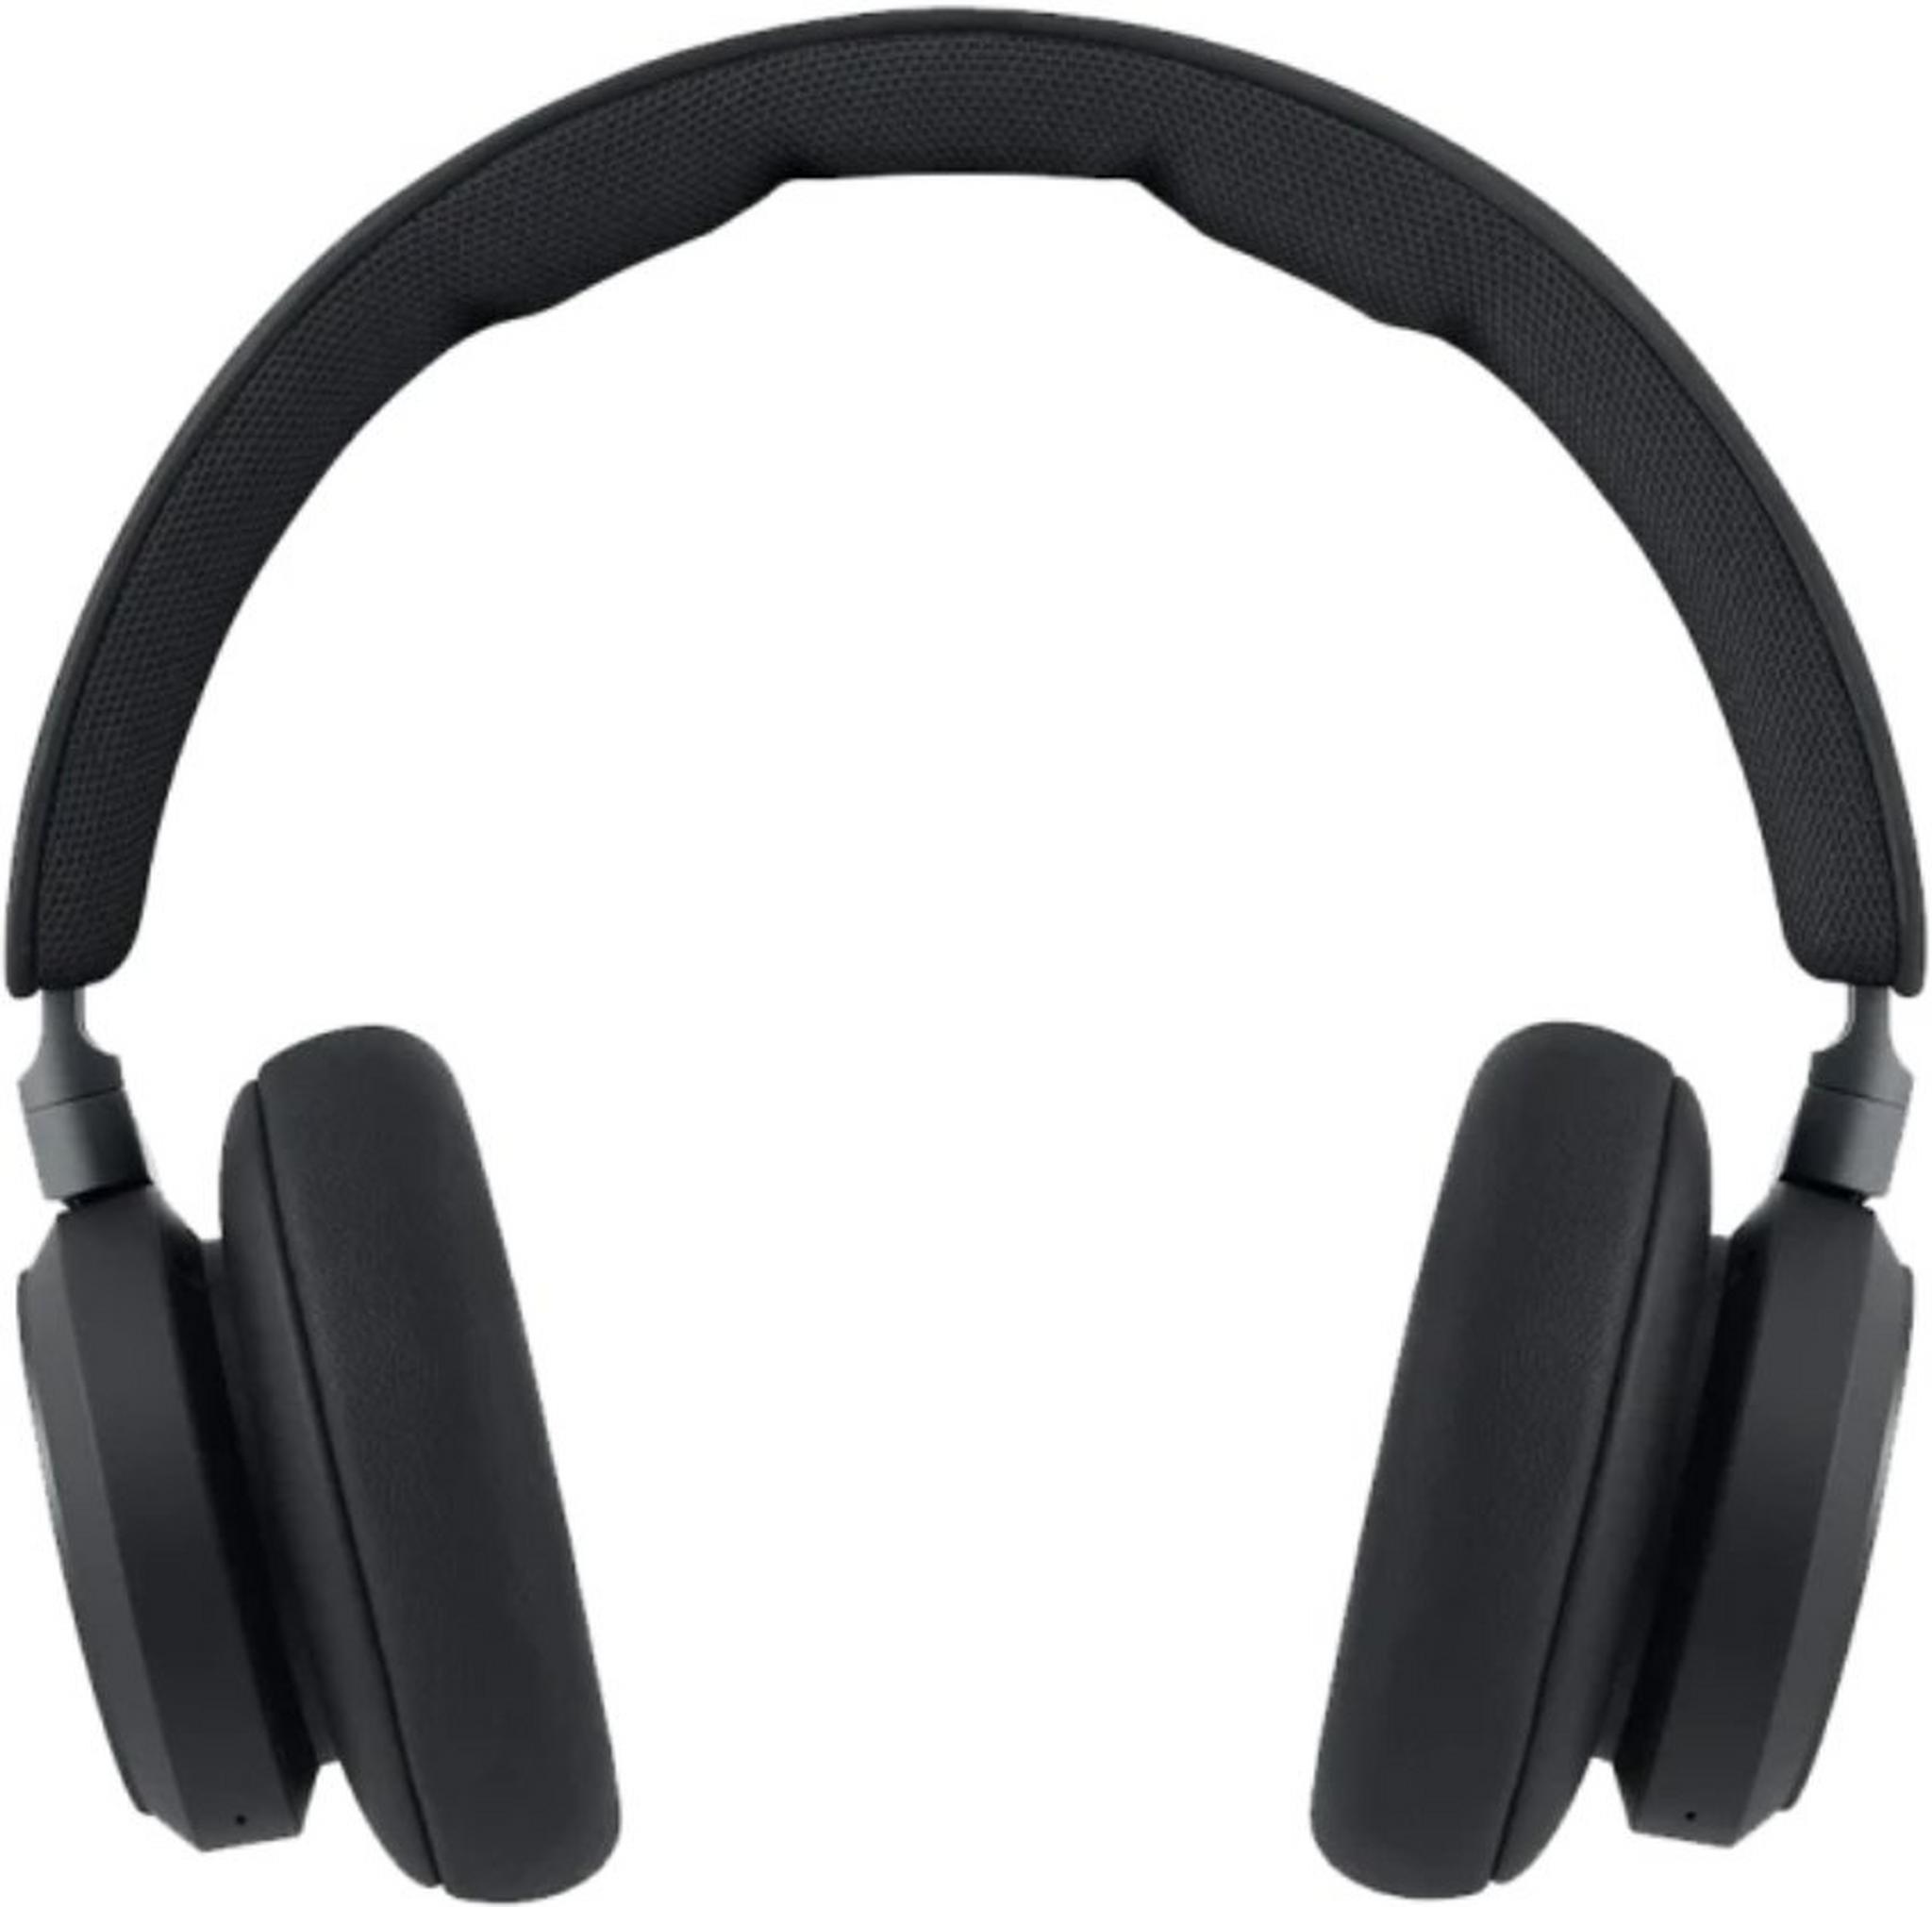 BO & Play Active Noise Cancellation Headphones - Black